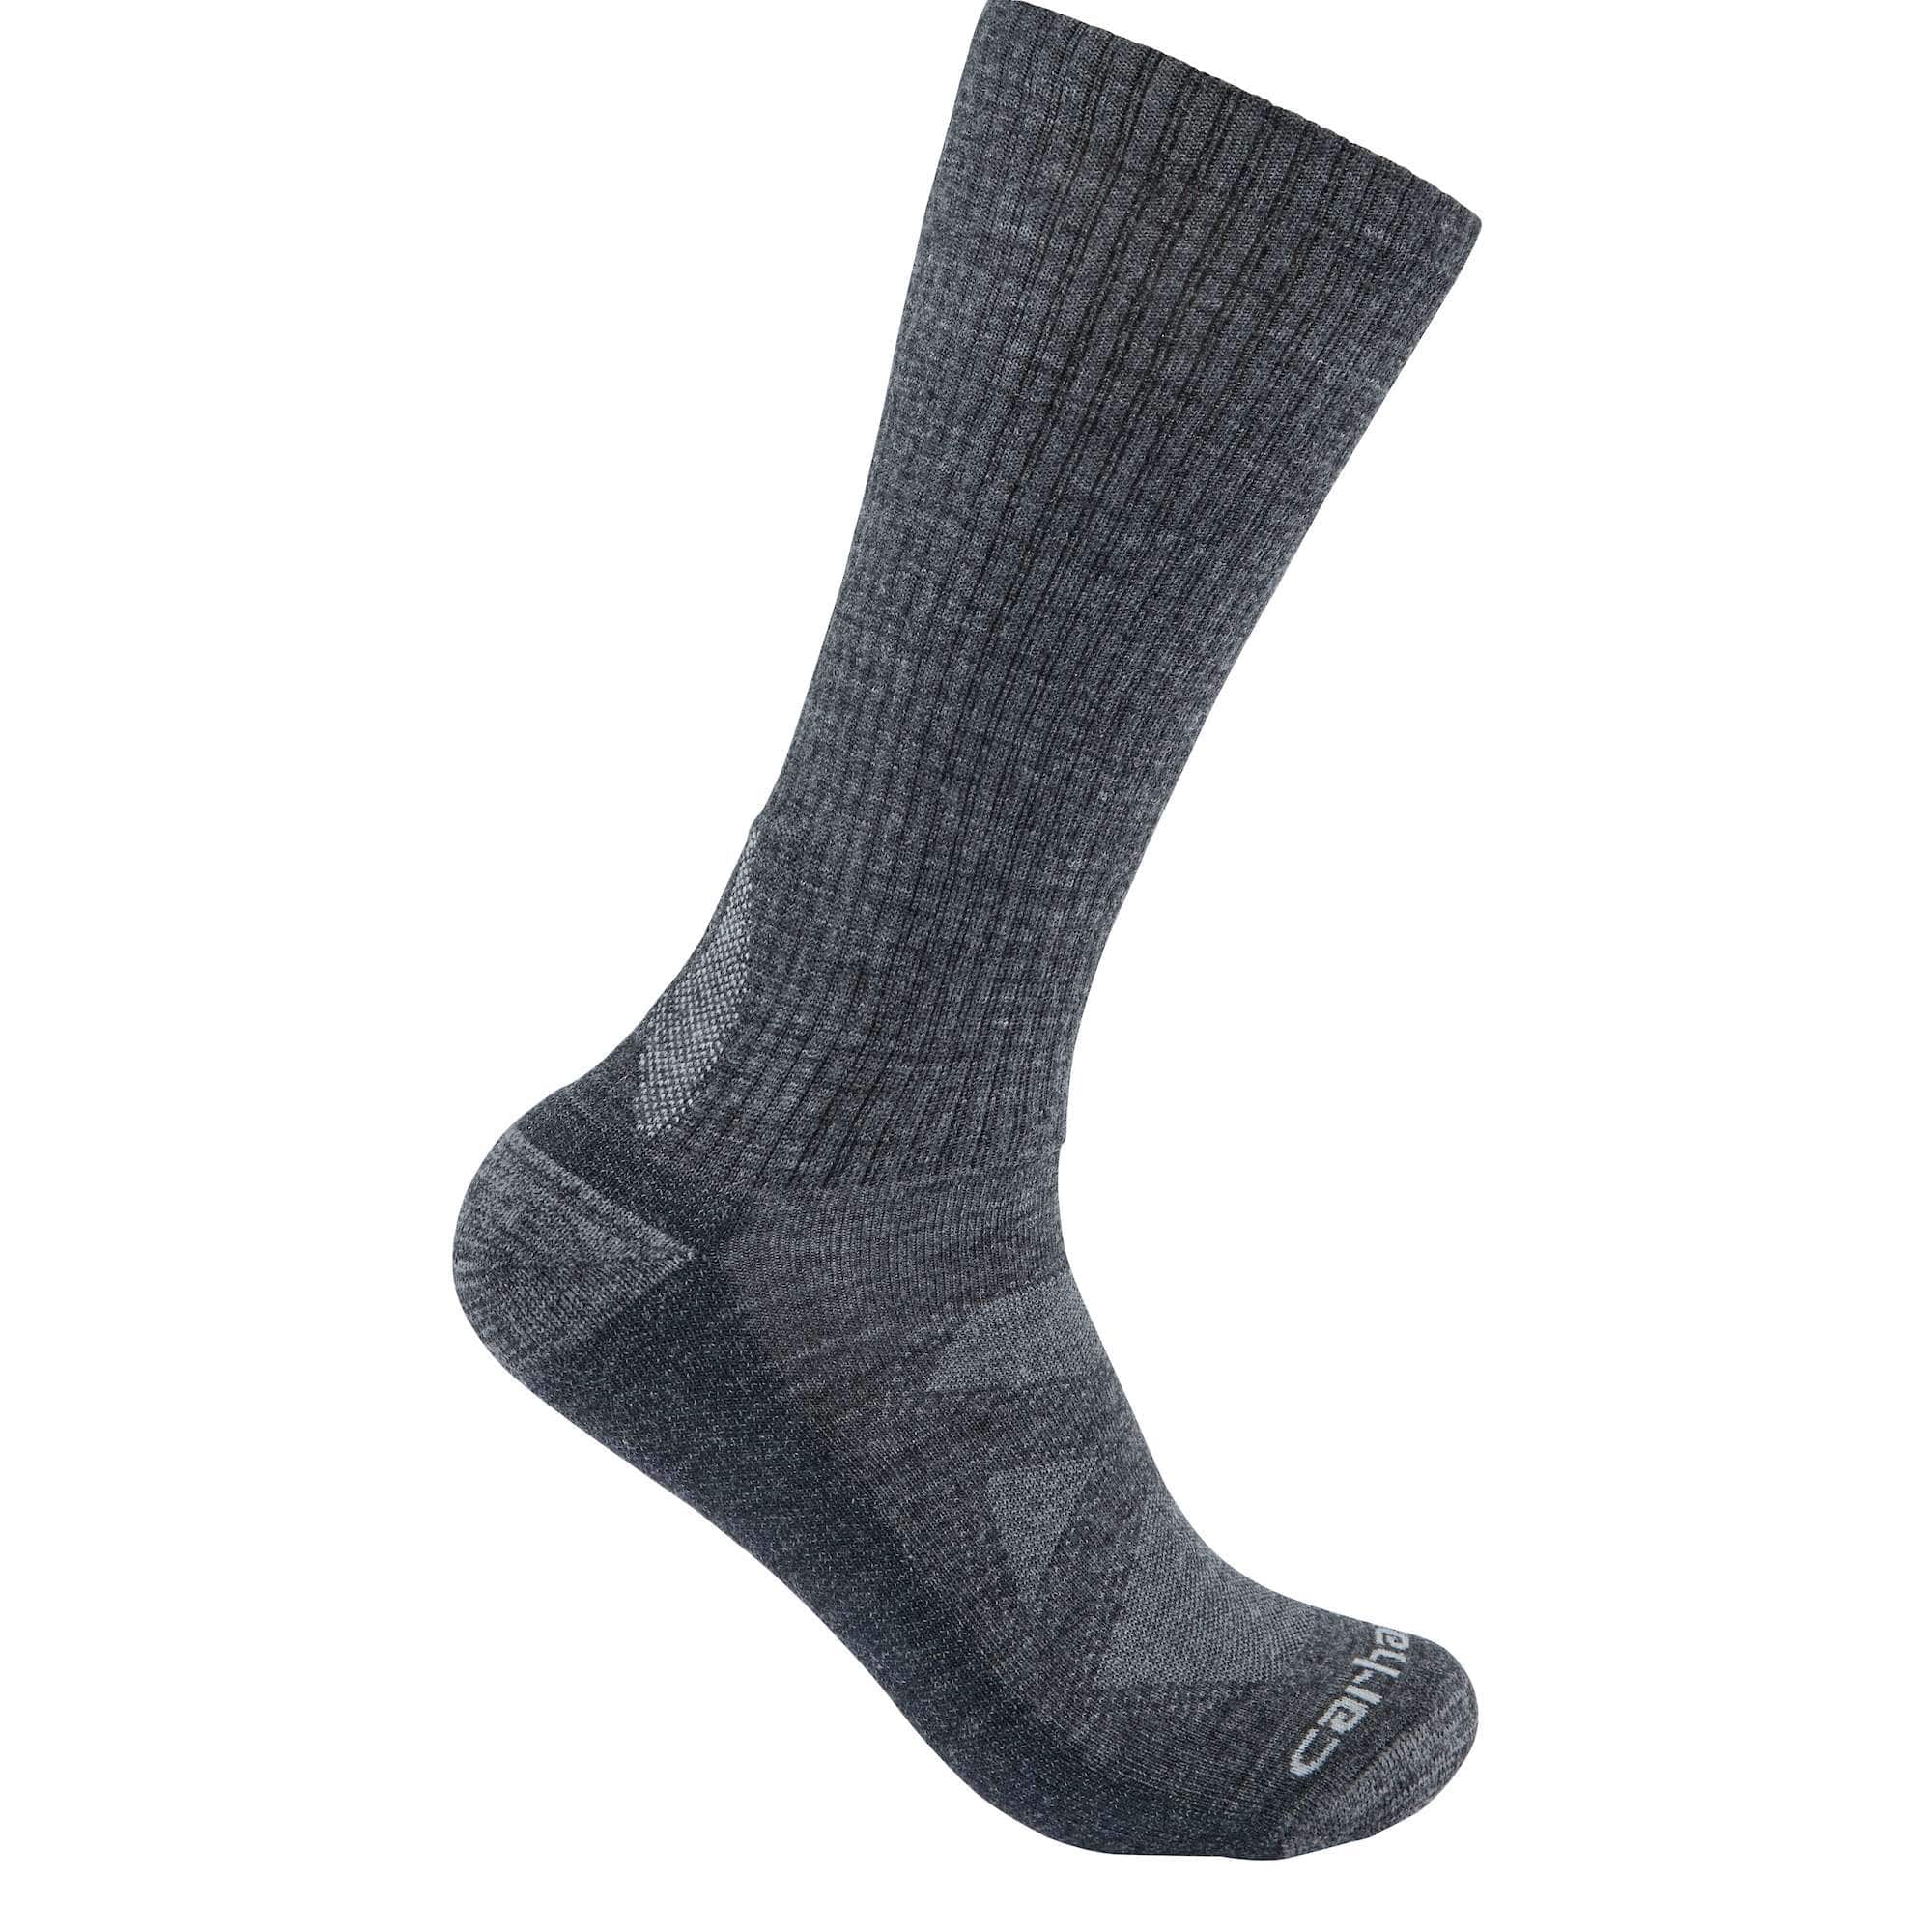 Carhartt Men's Merino Wool Comfort-Stretch Steel Toe Socks